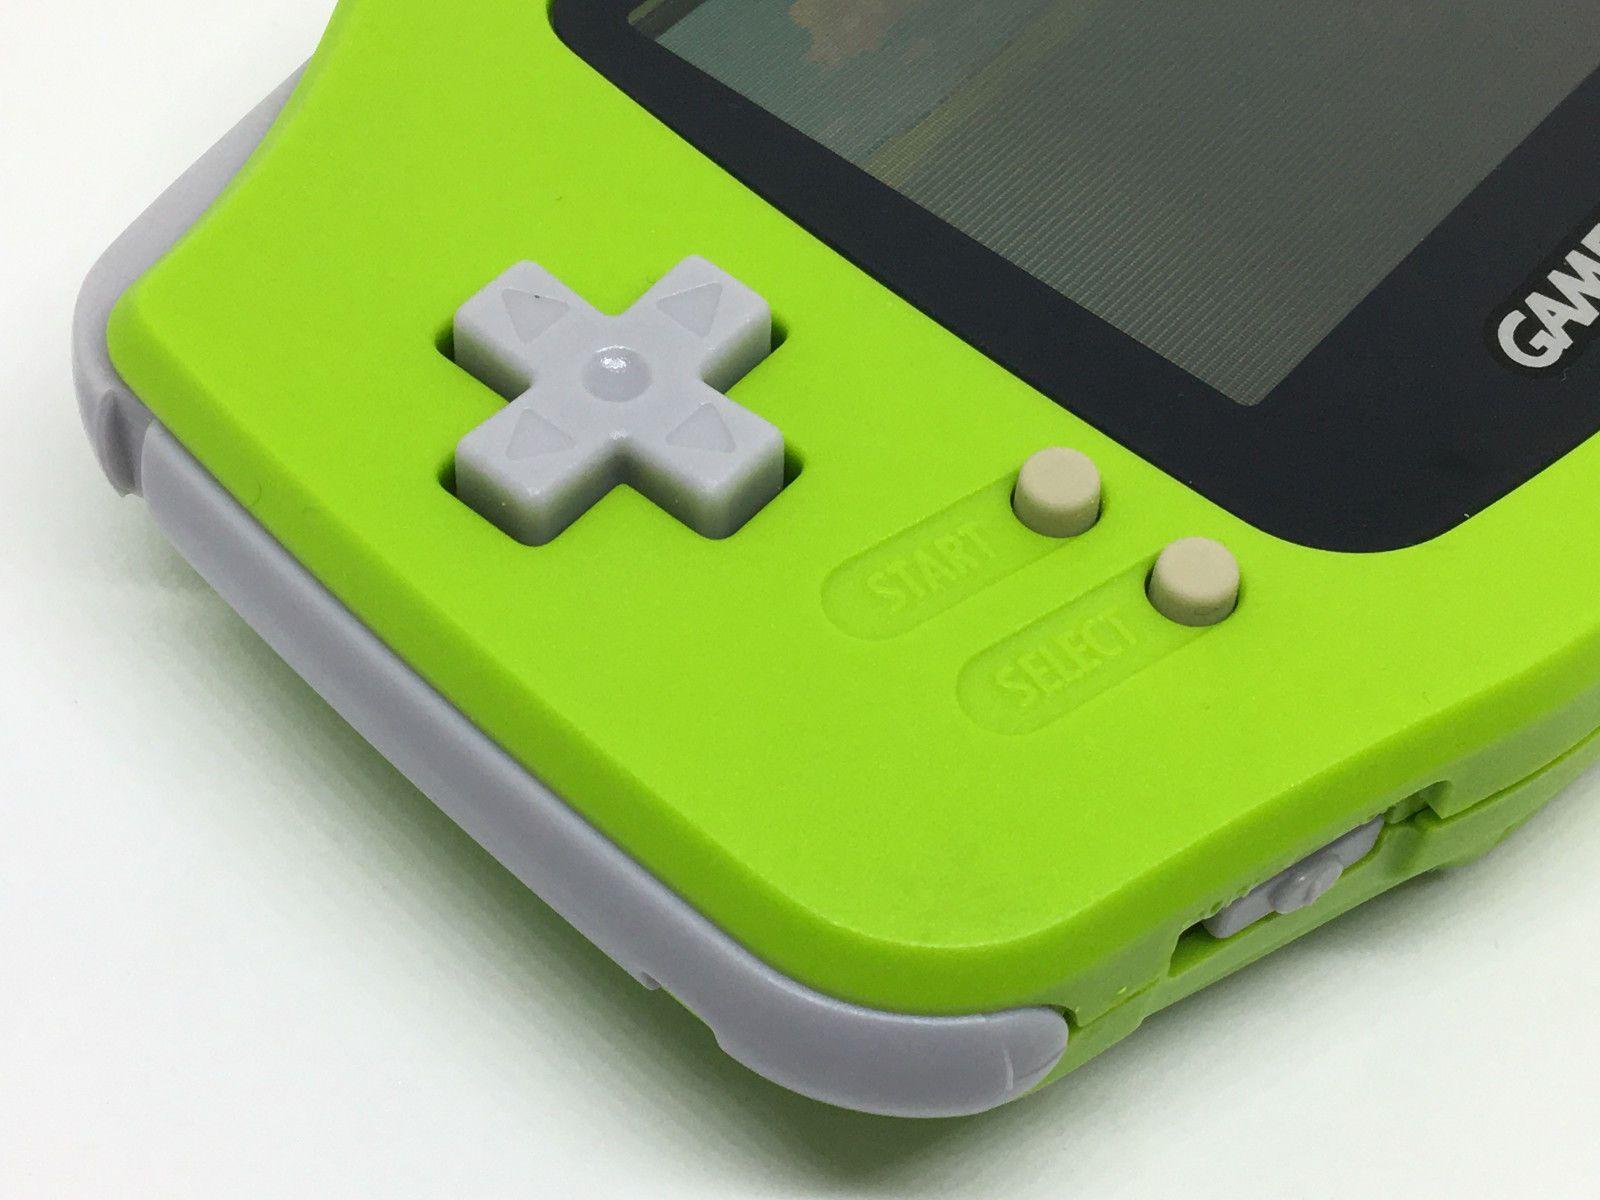 Lime Green C Gaming Logo - Nintendo GBA AGS-101 Backlight Mod USB-C Gameboy Advance GBA E-Gamer ...